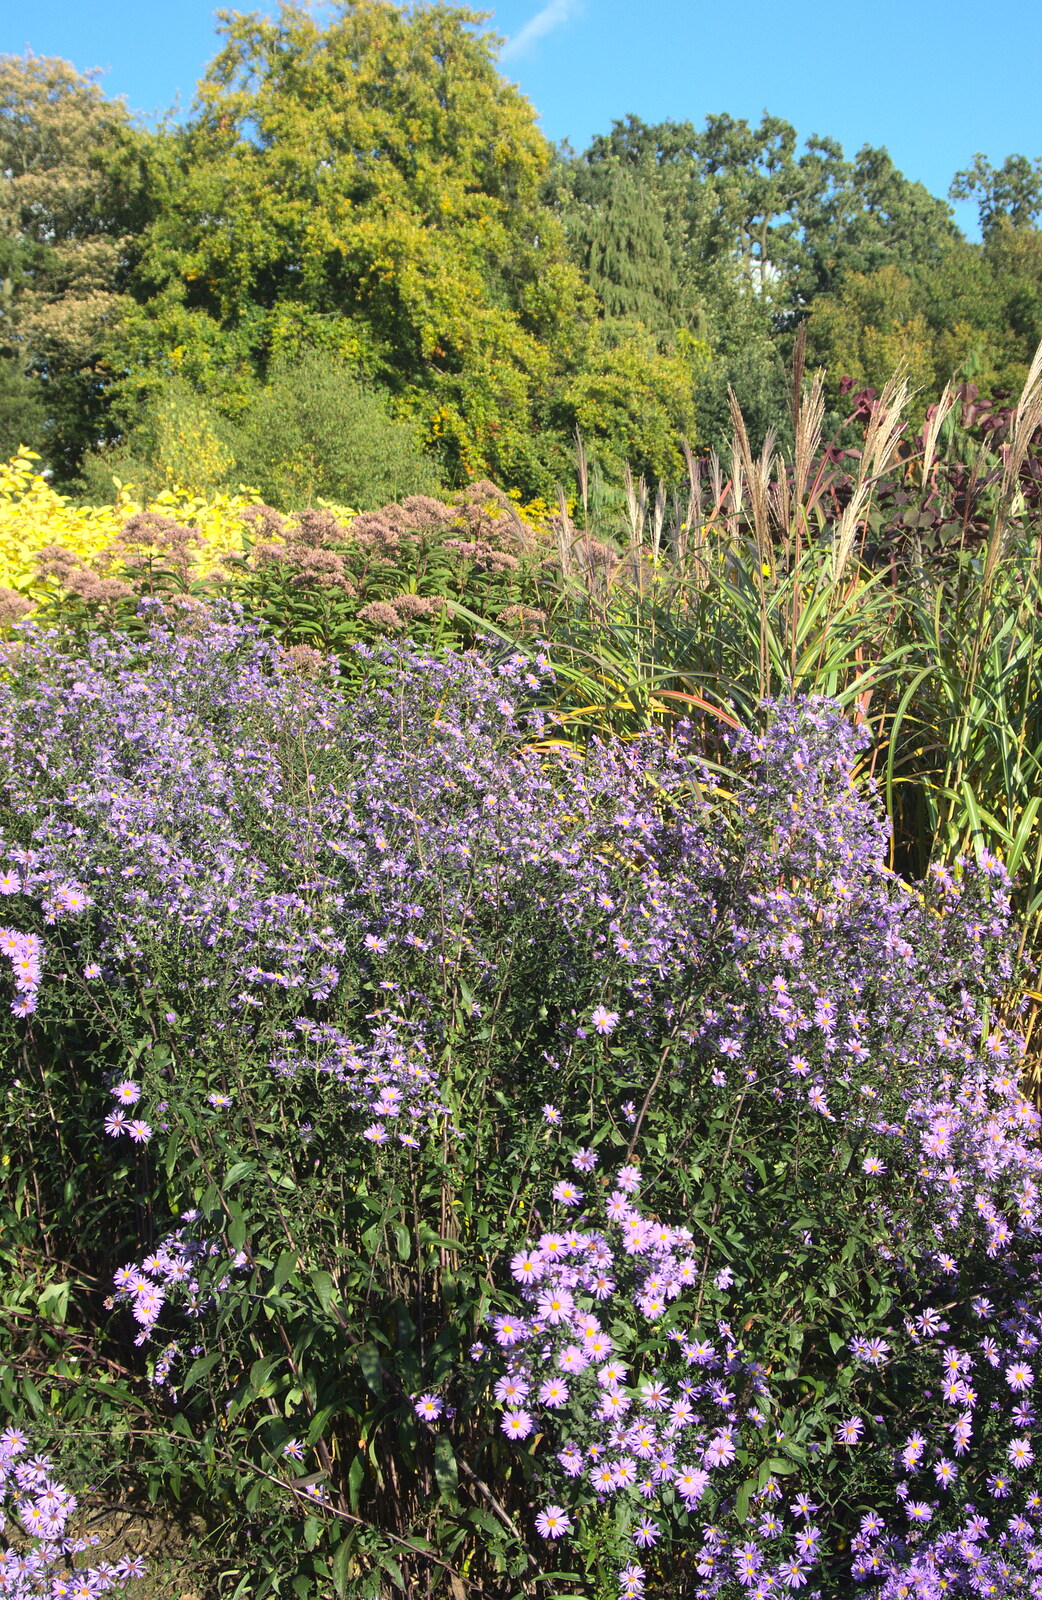 More purple flowers from Alan Bloom's Gardens, Bressingham, Norfolk - 6th October 2012